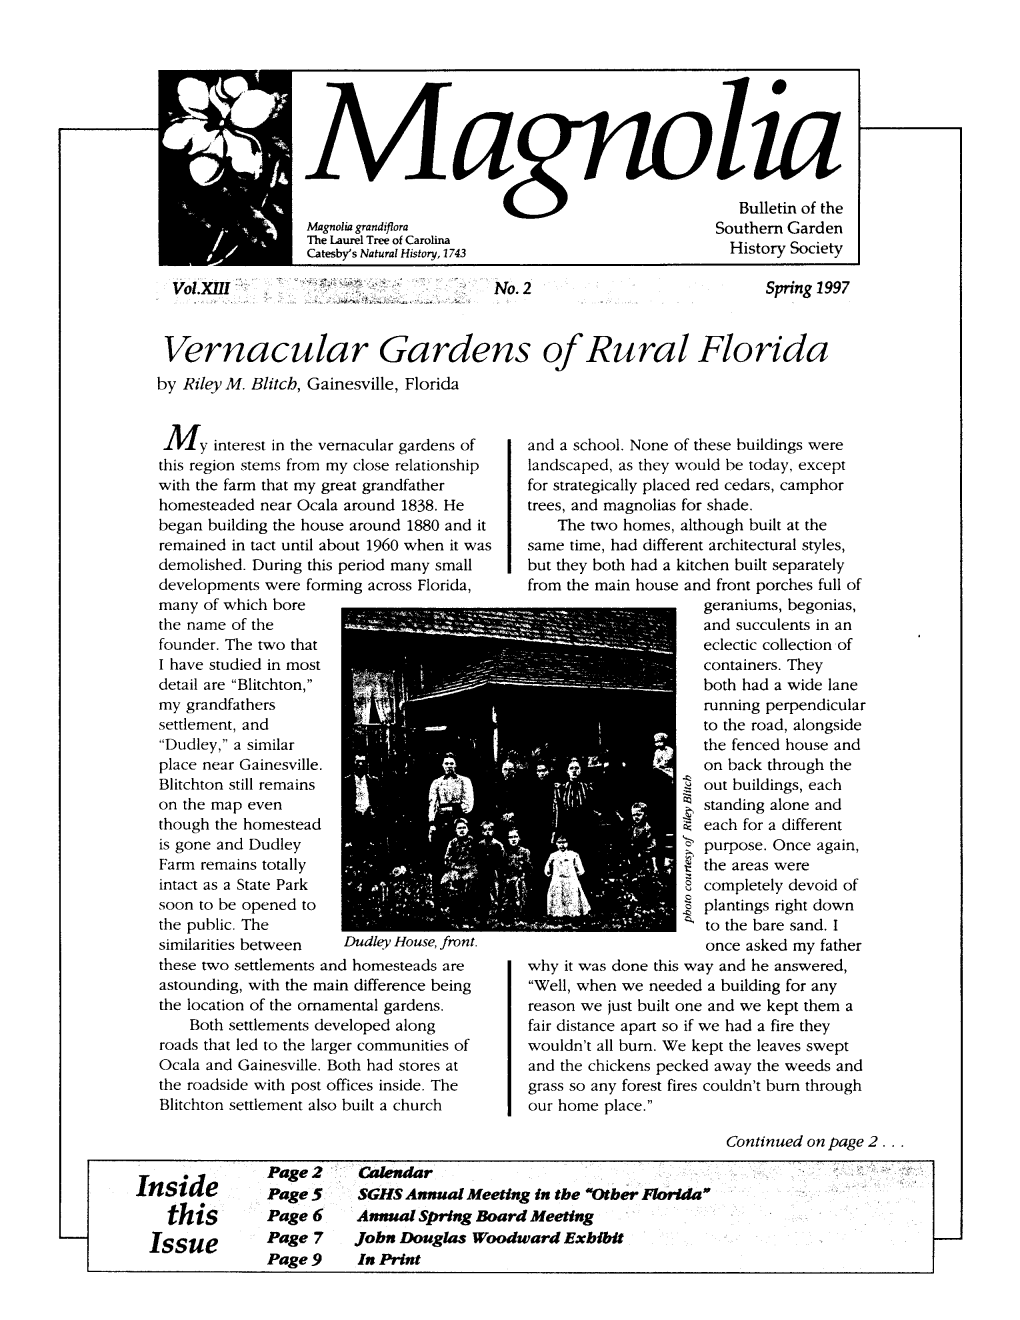 Vernacular Gardens of Rural Florida by Riley M